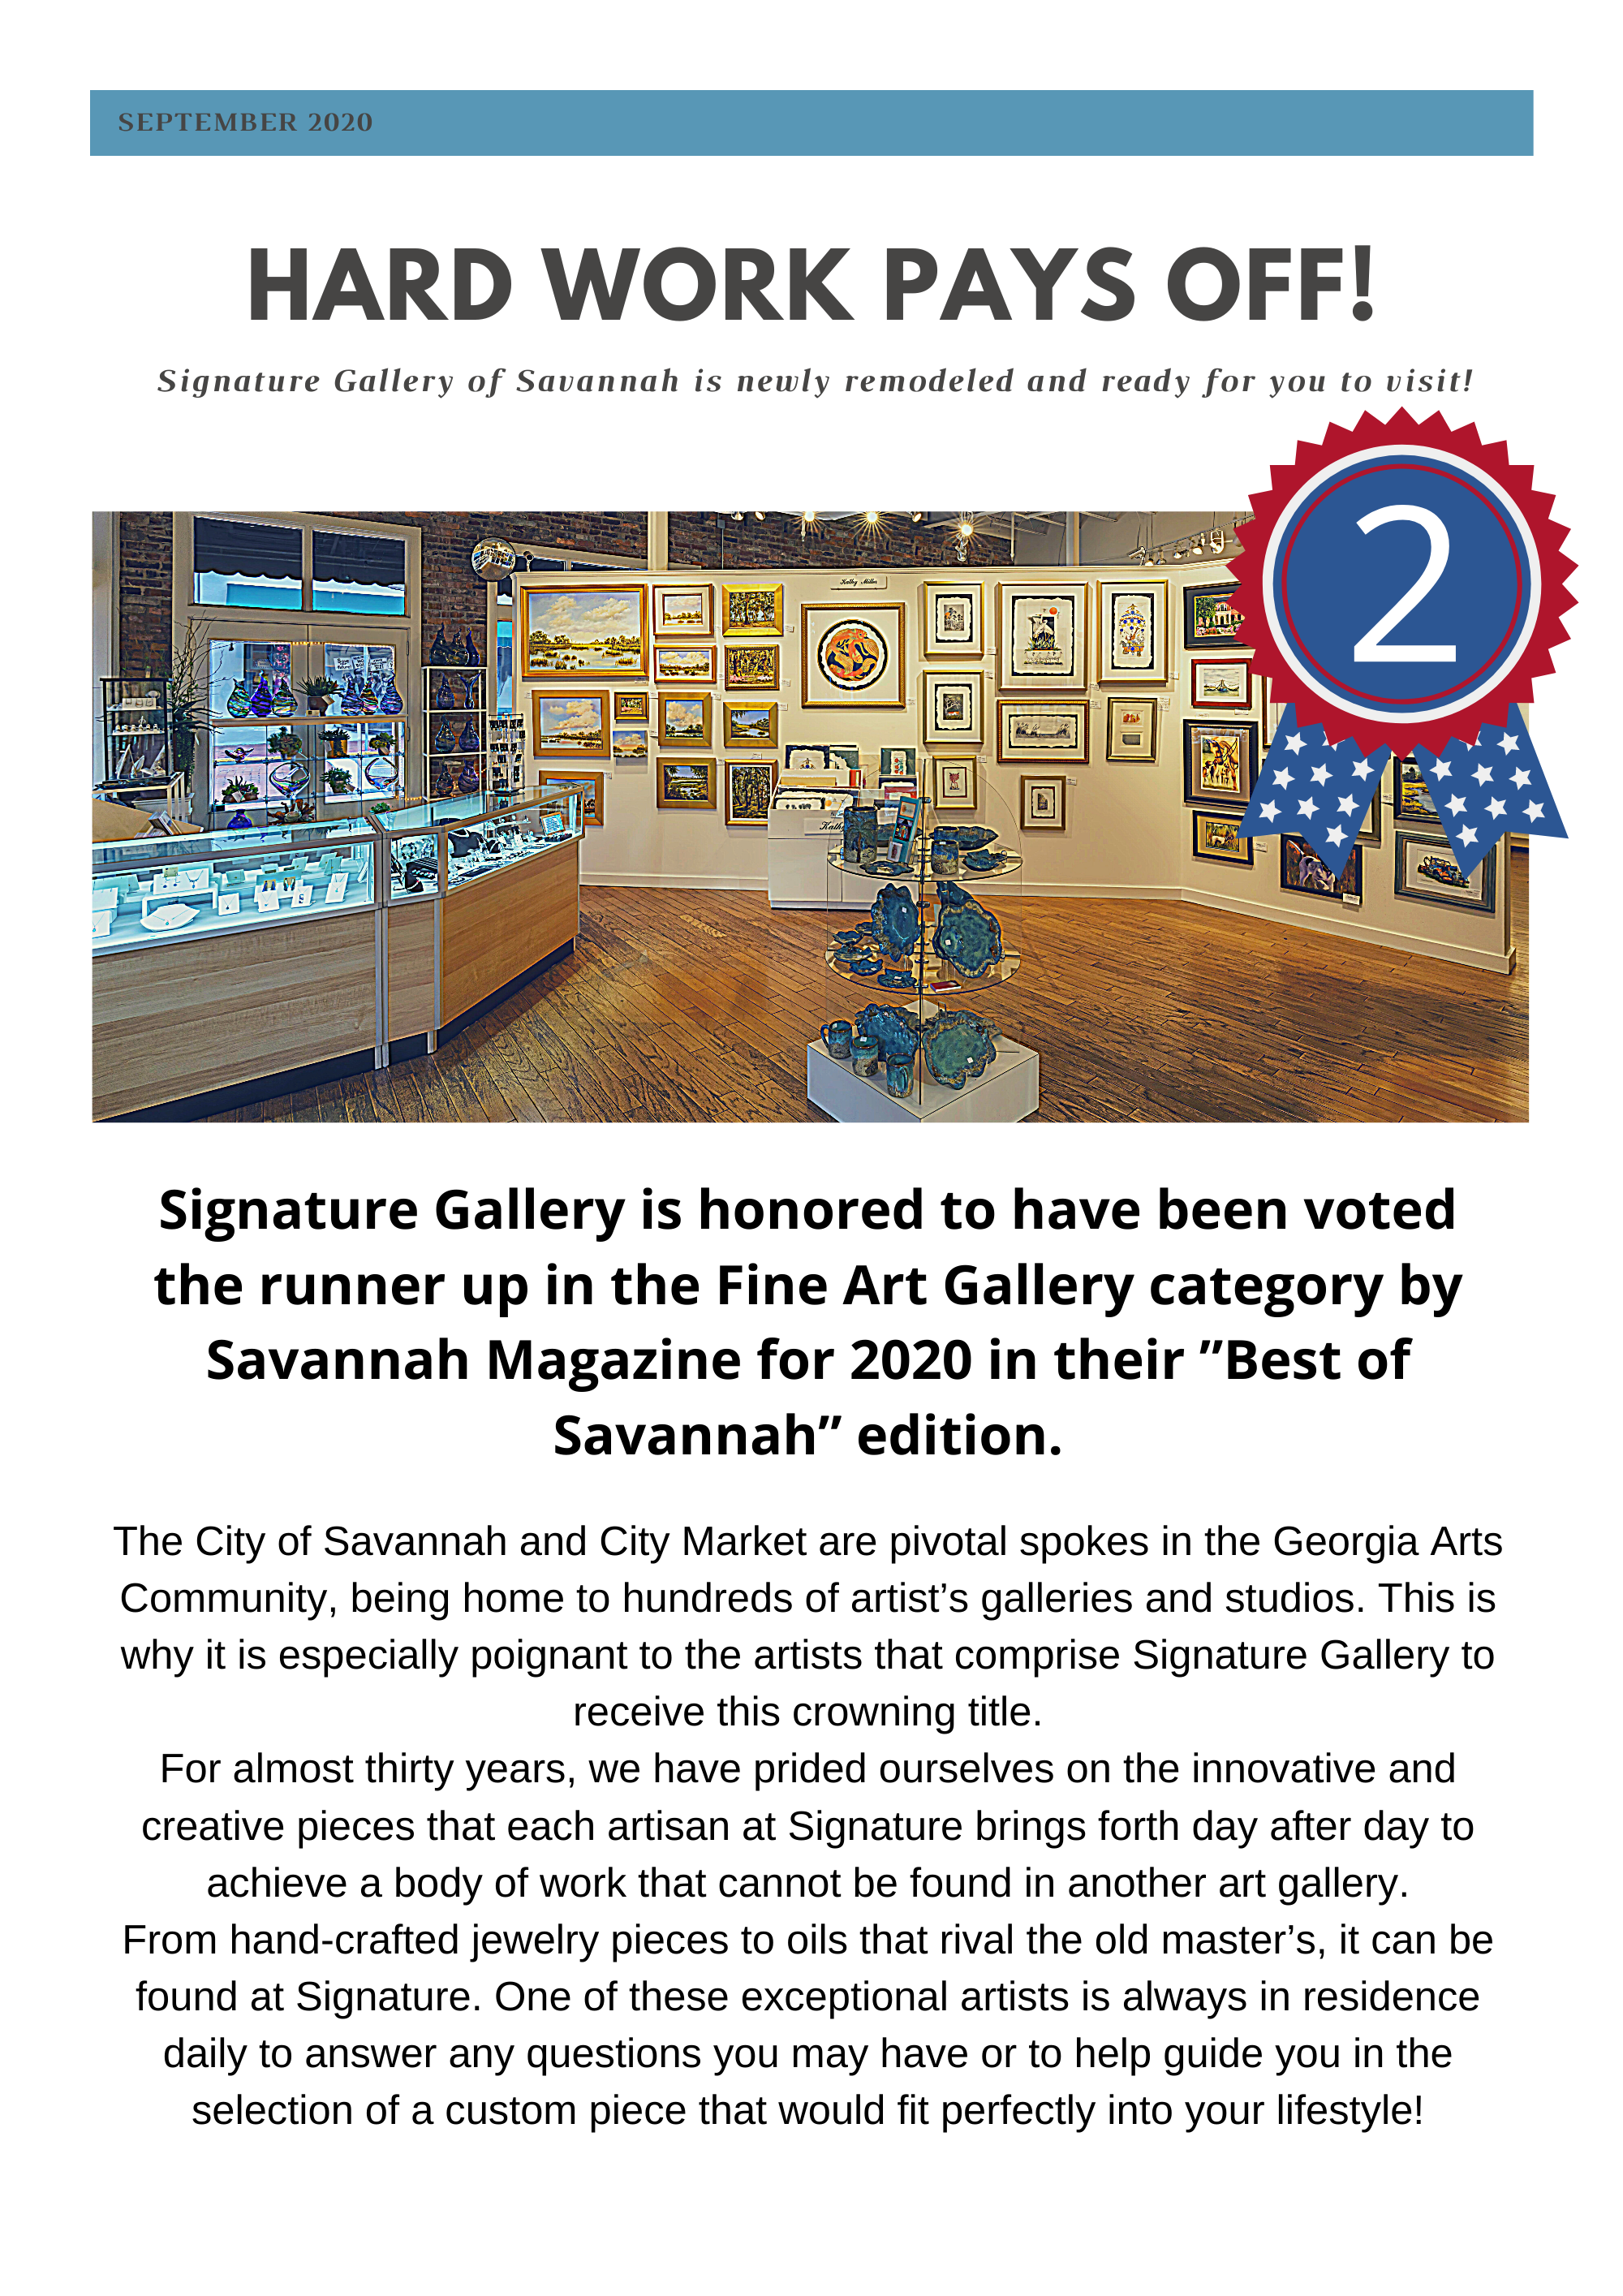 Signature Gallery Savannah